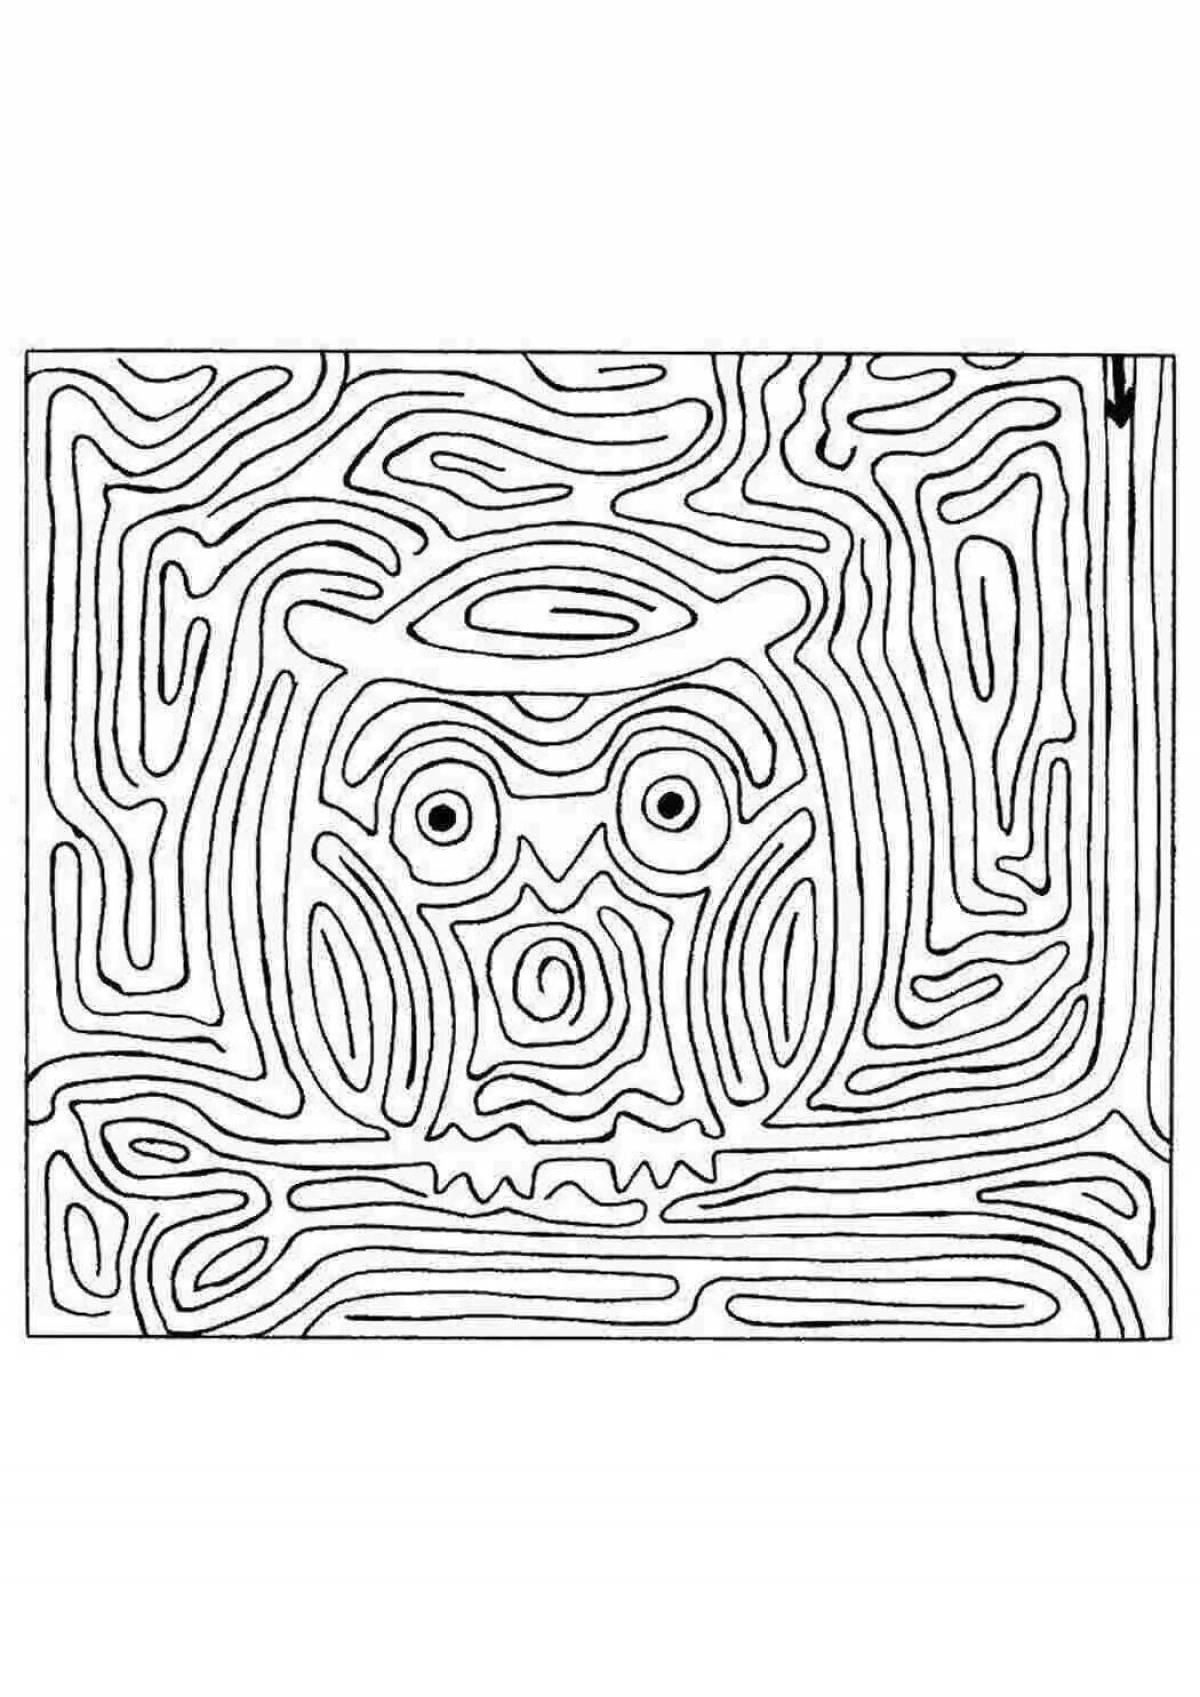 Peaceful coloring maze antistress